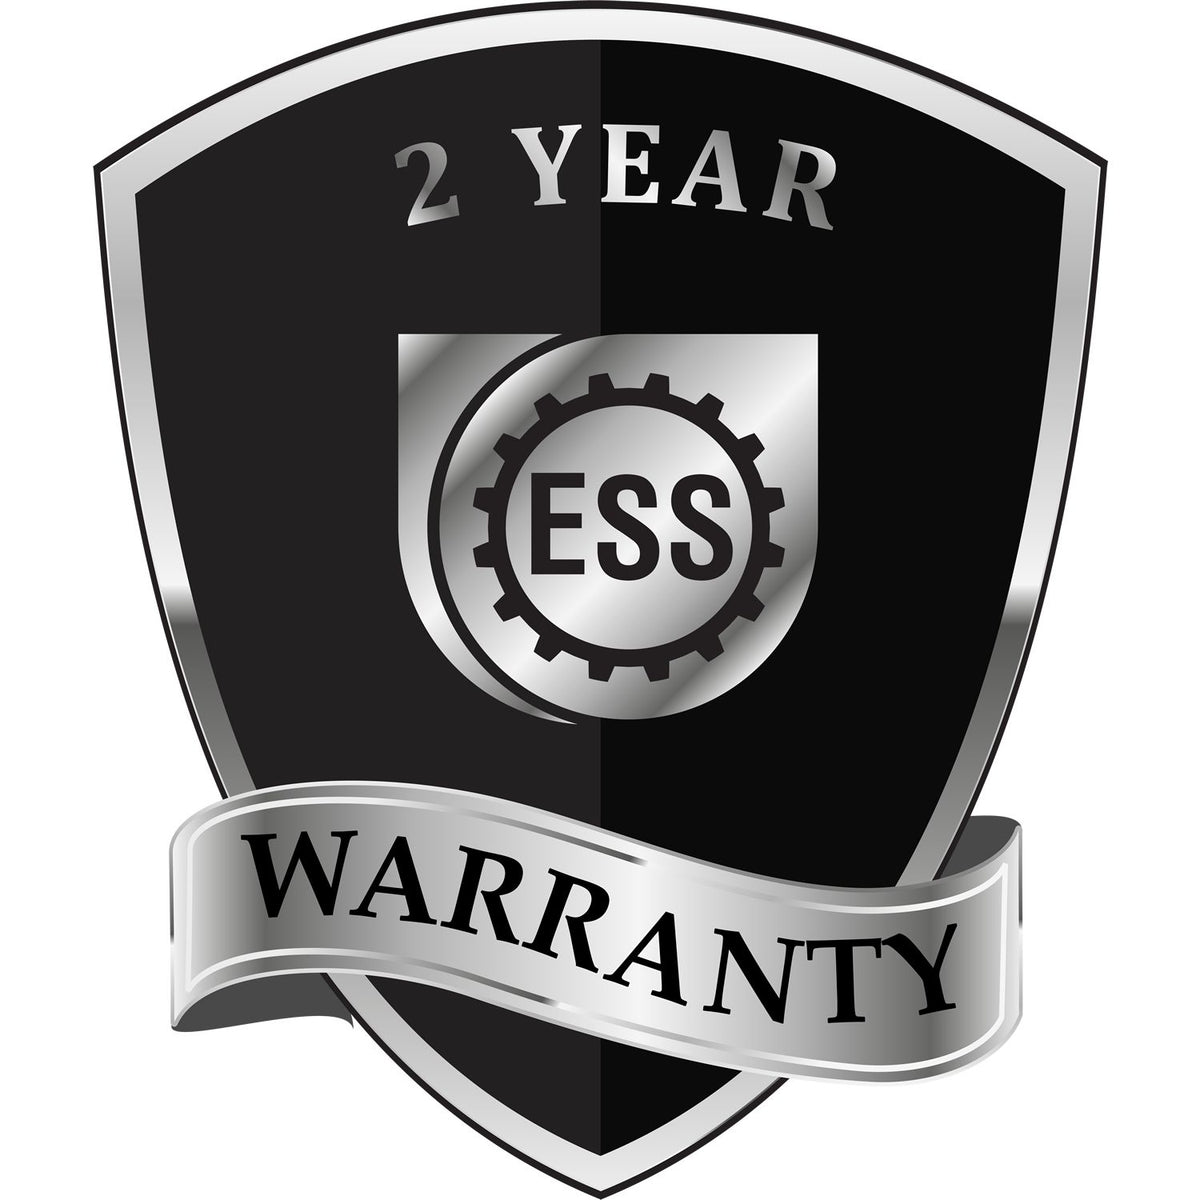 A black and silver badge or emblem showing warranty information for the Gift Massachusetts Land Surveyor Seal